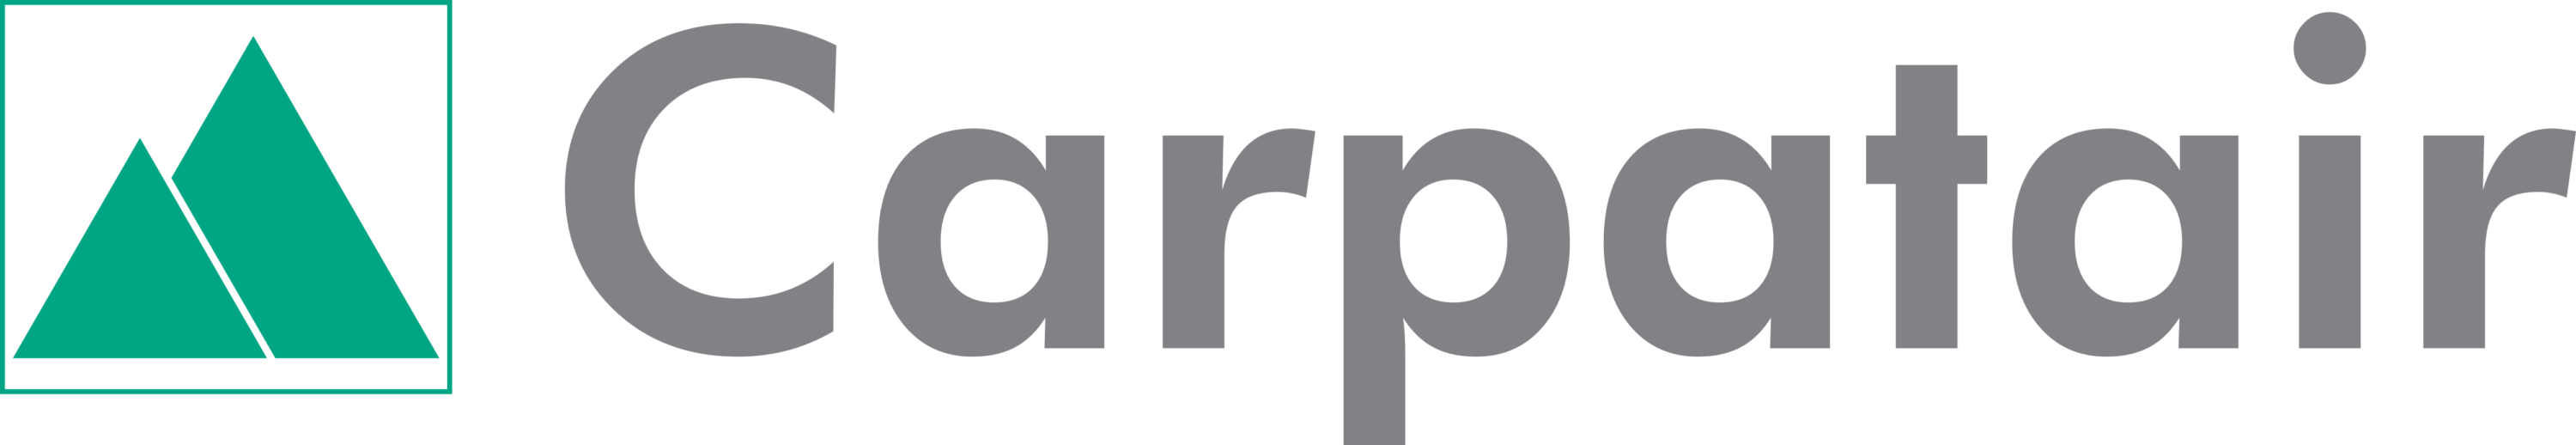 Carpatair Logo